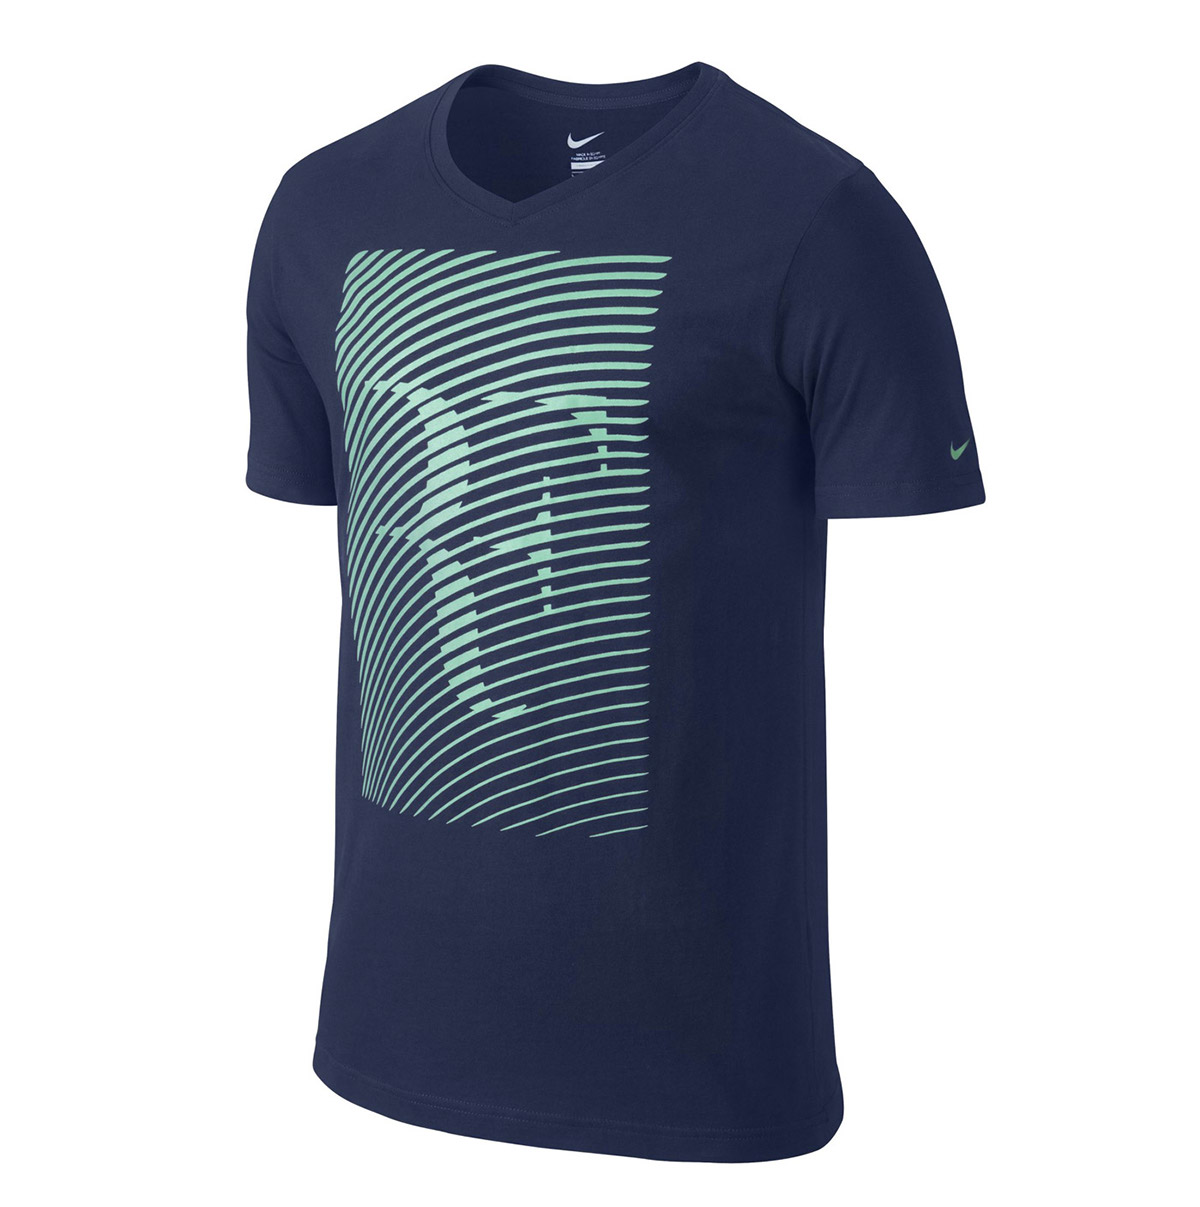 Nike T-Shirts on Behance